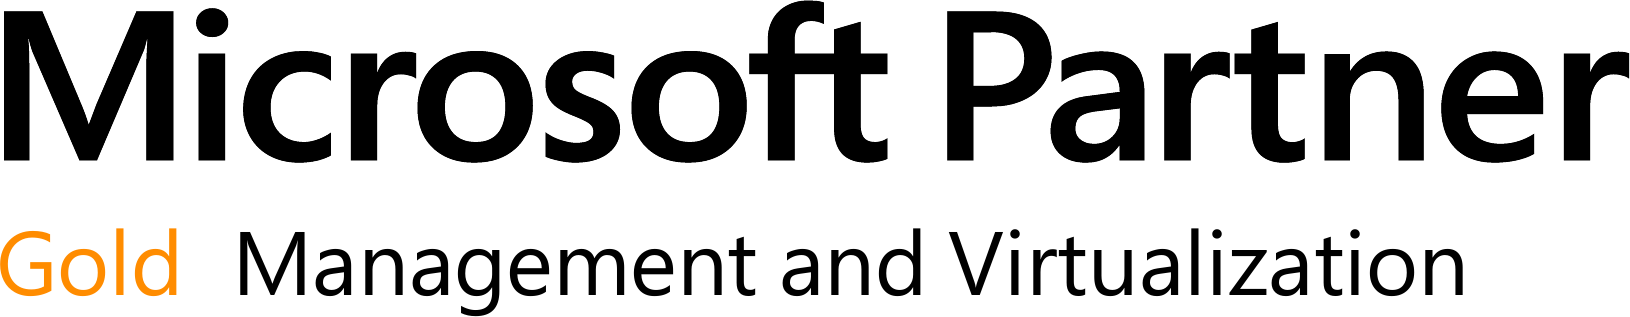 Microsoft Partner Gold Management and Virtualization